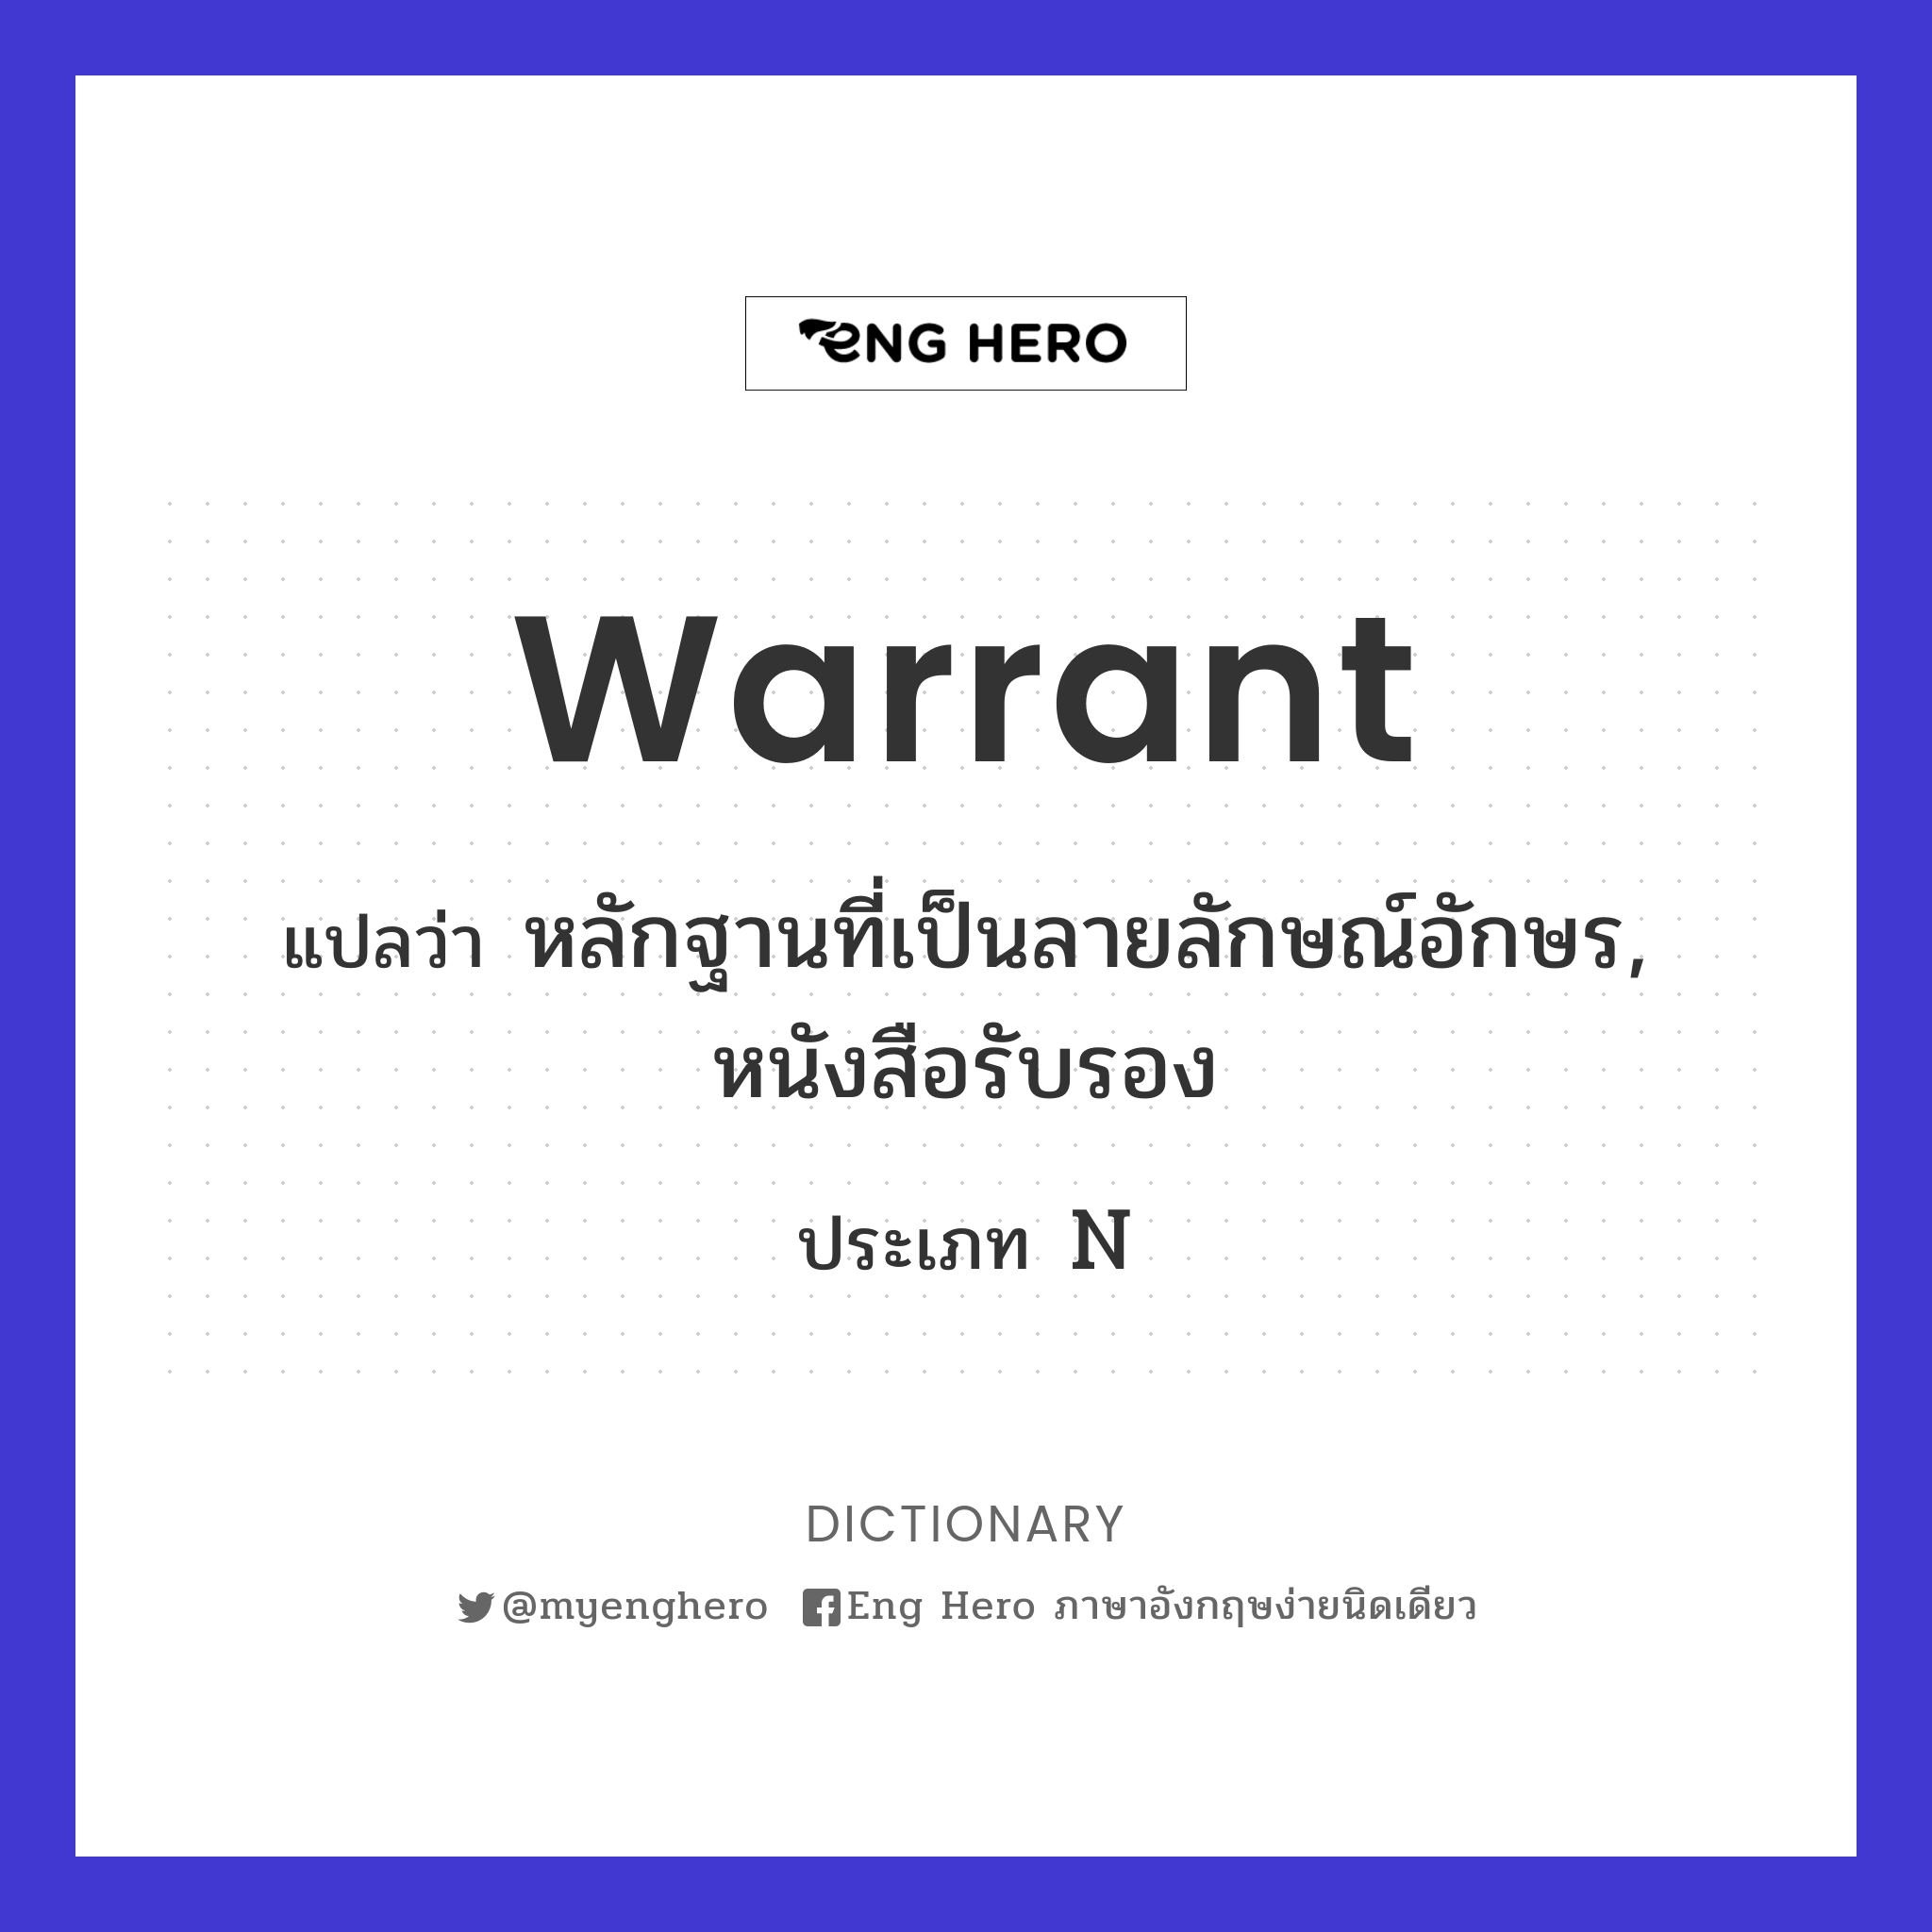 warrant